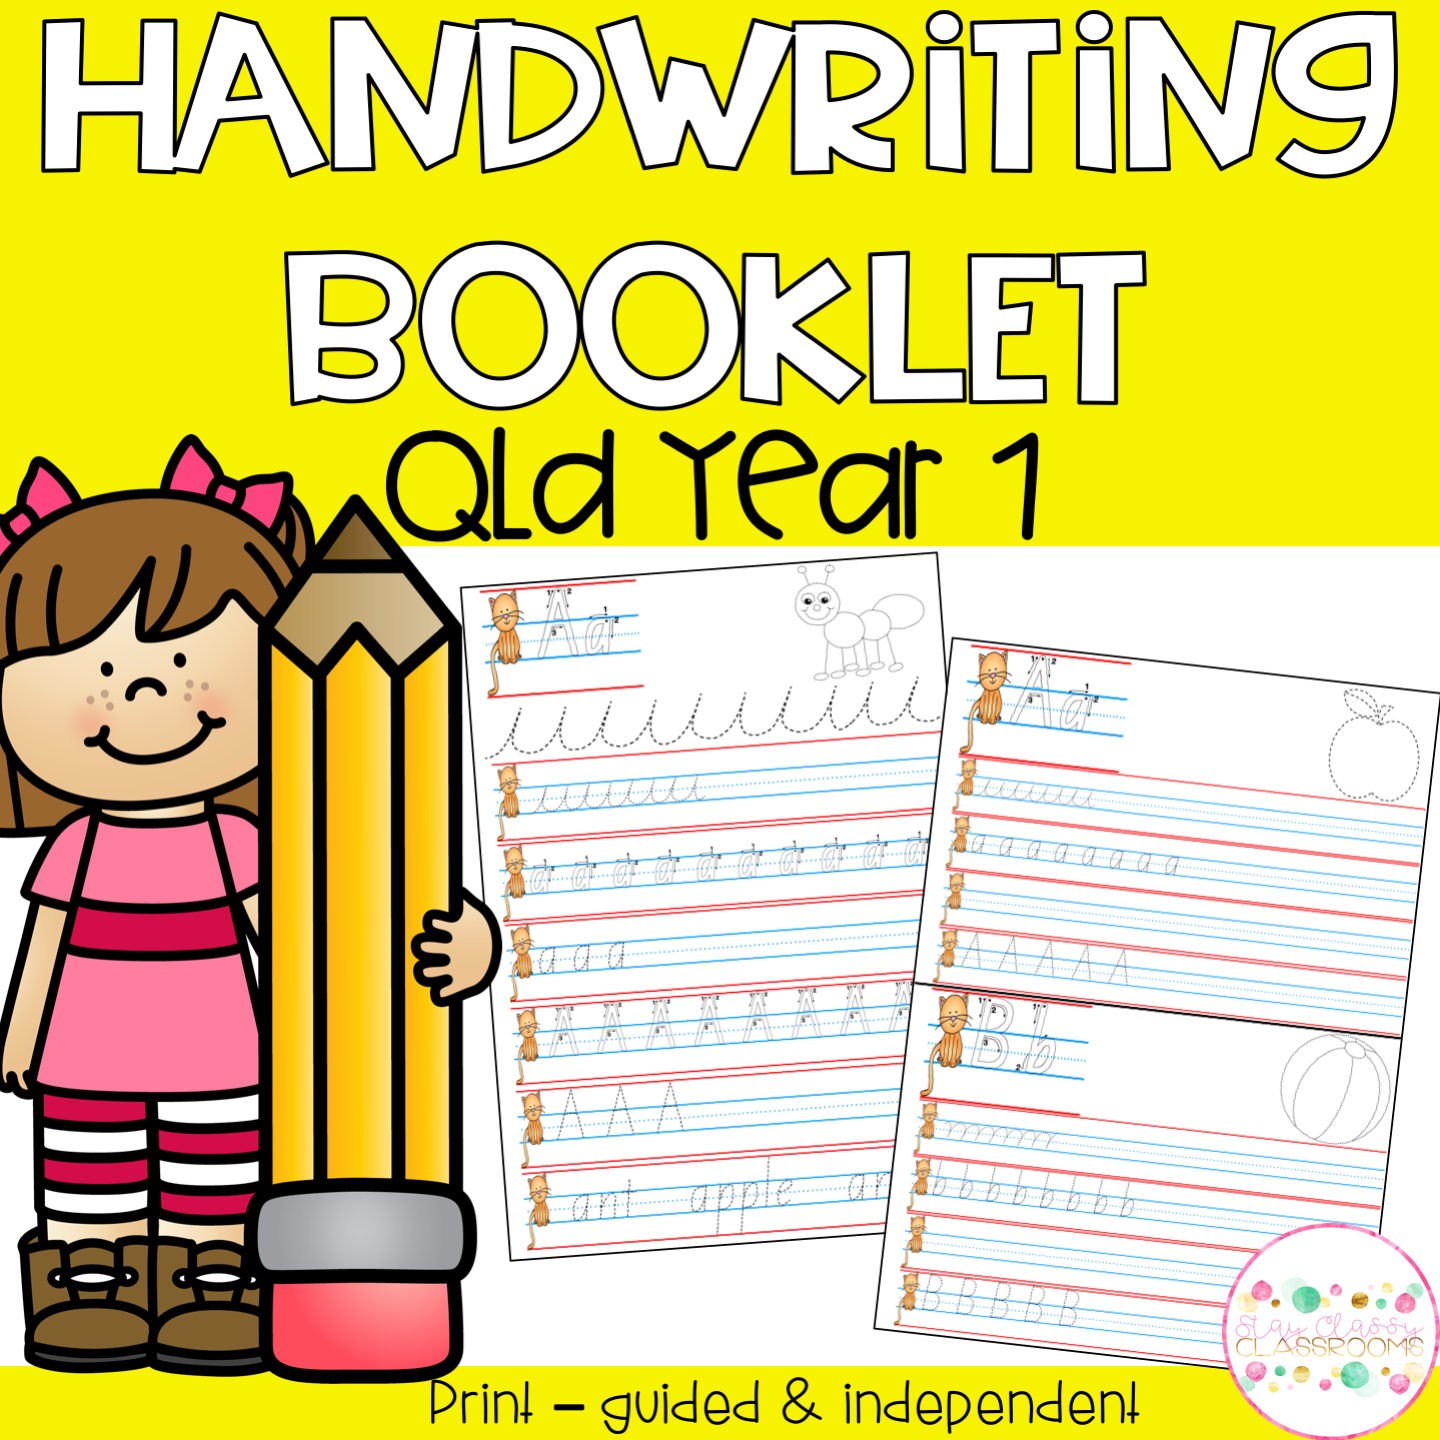 Handwriting Booklets - Qld Year 1